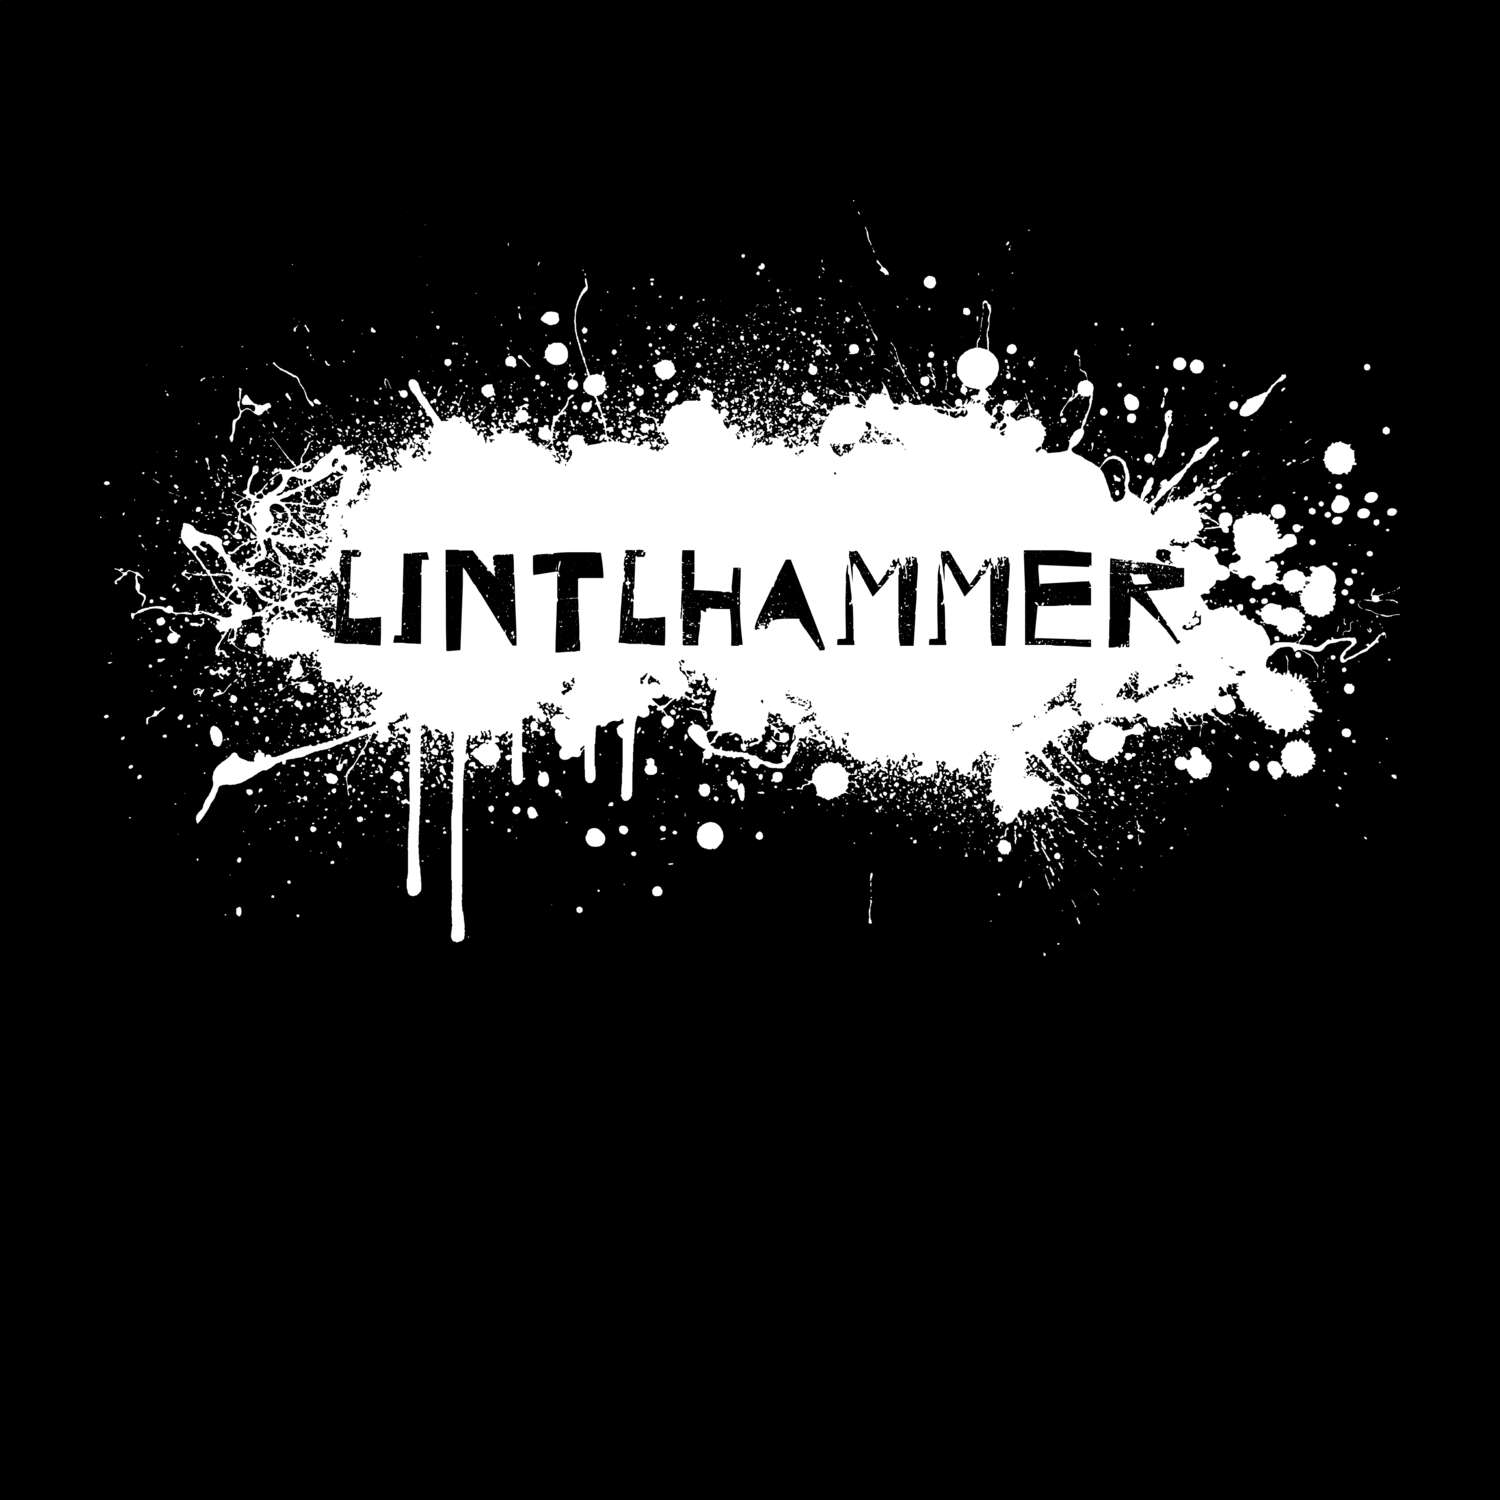 Lintlhammer T-Shirt »Paint Splash Punk«